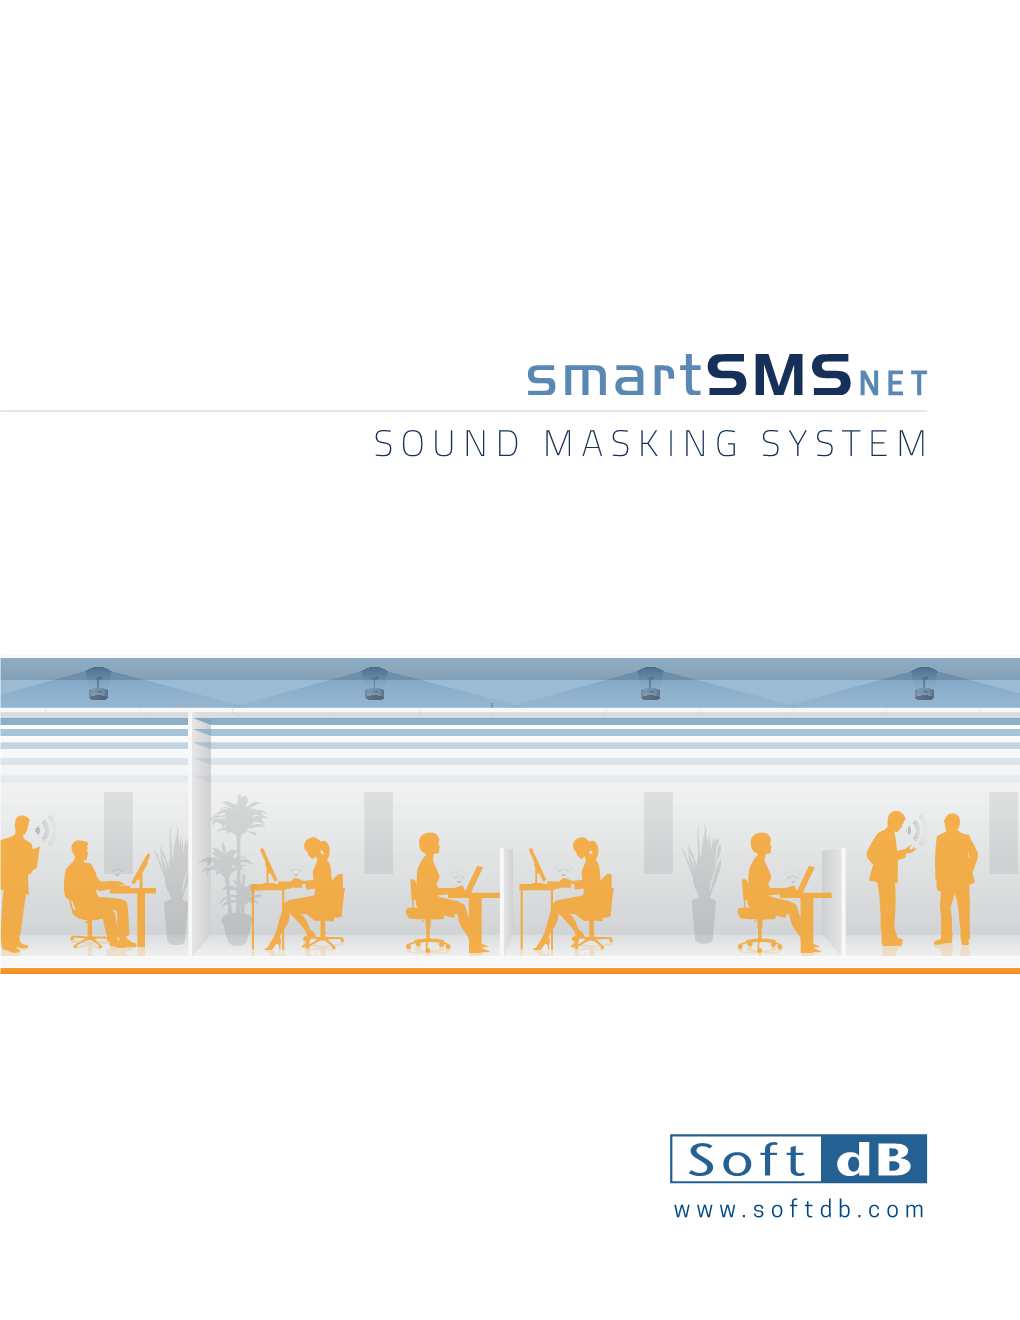 Smartsms-NET Sound Masking System Overview | Soft Db